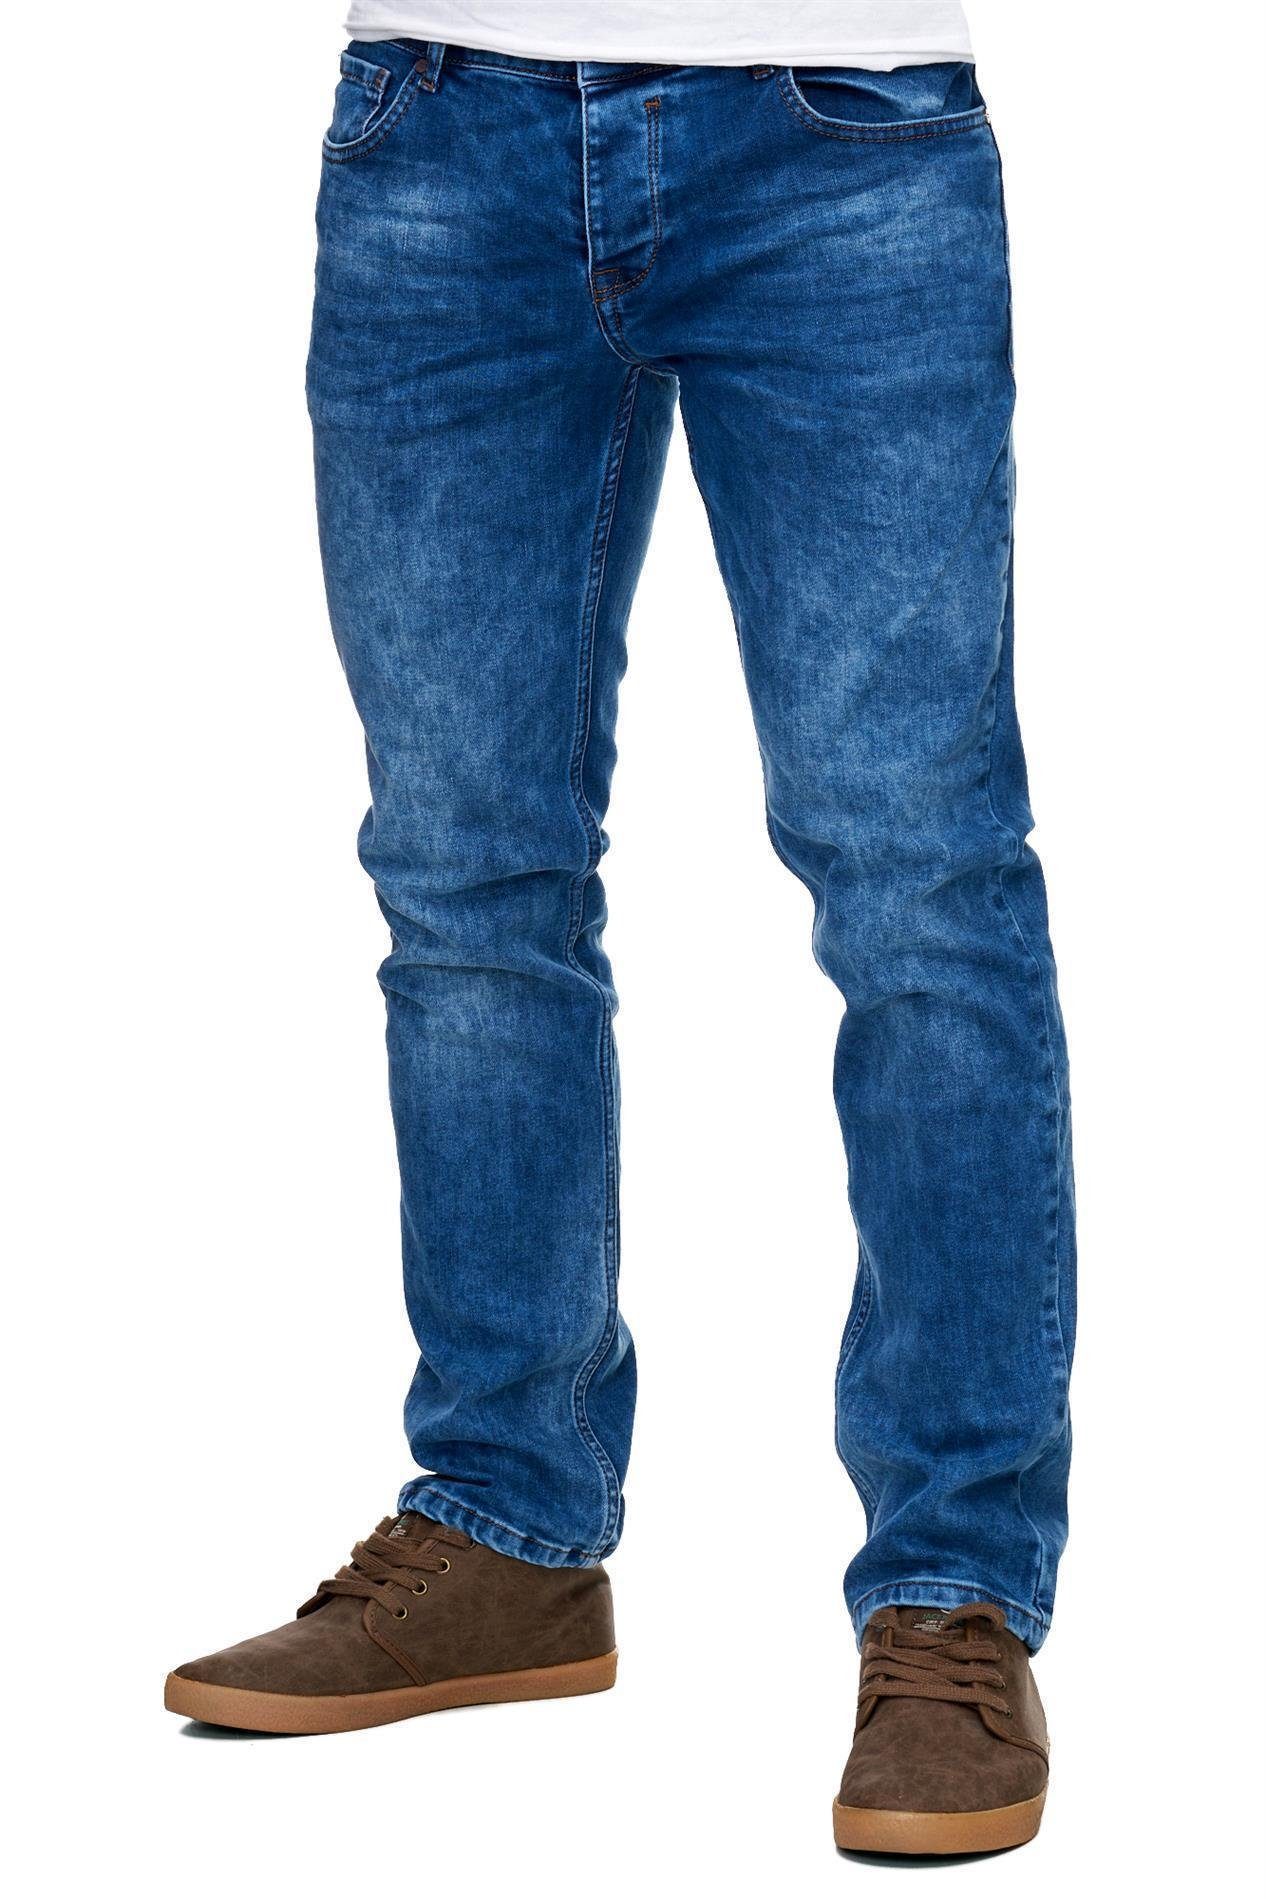 Reslad Stretch-Jeans Reslad Jeans-Herren Slim Fit Basic Style Stretch-Denim Jeans-Hose Stretch Jeans-Hose Slim Fit blau